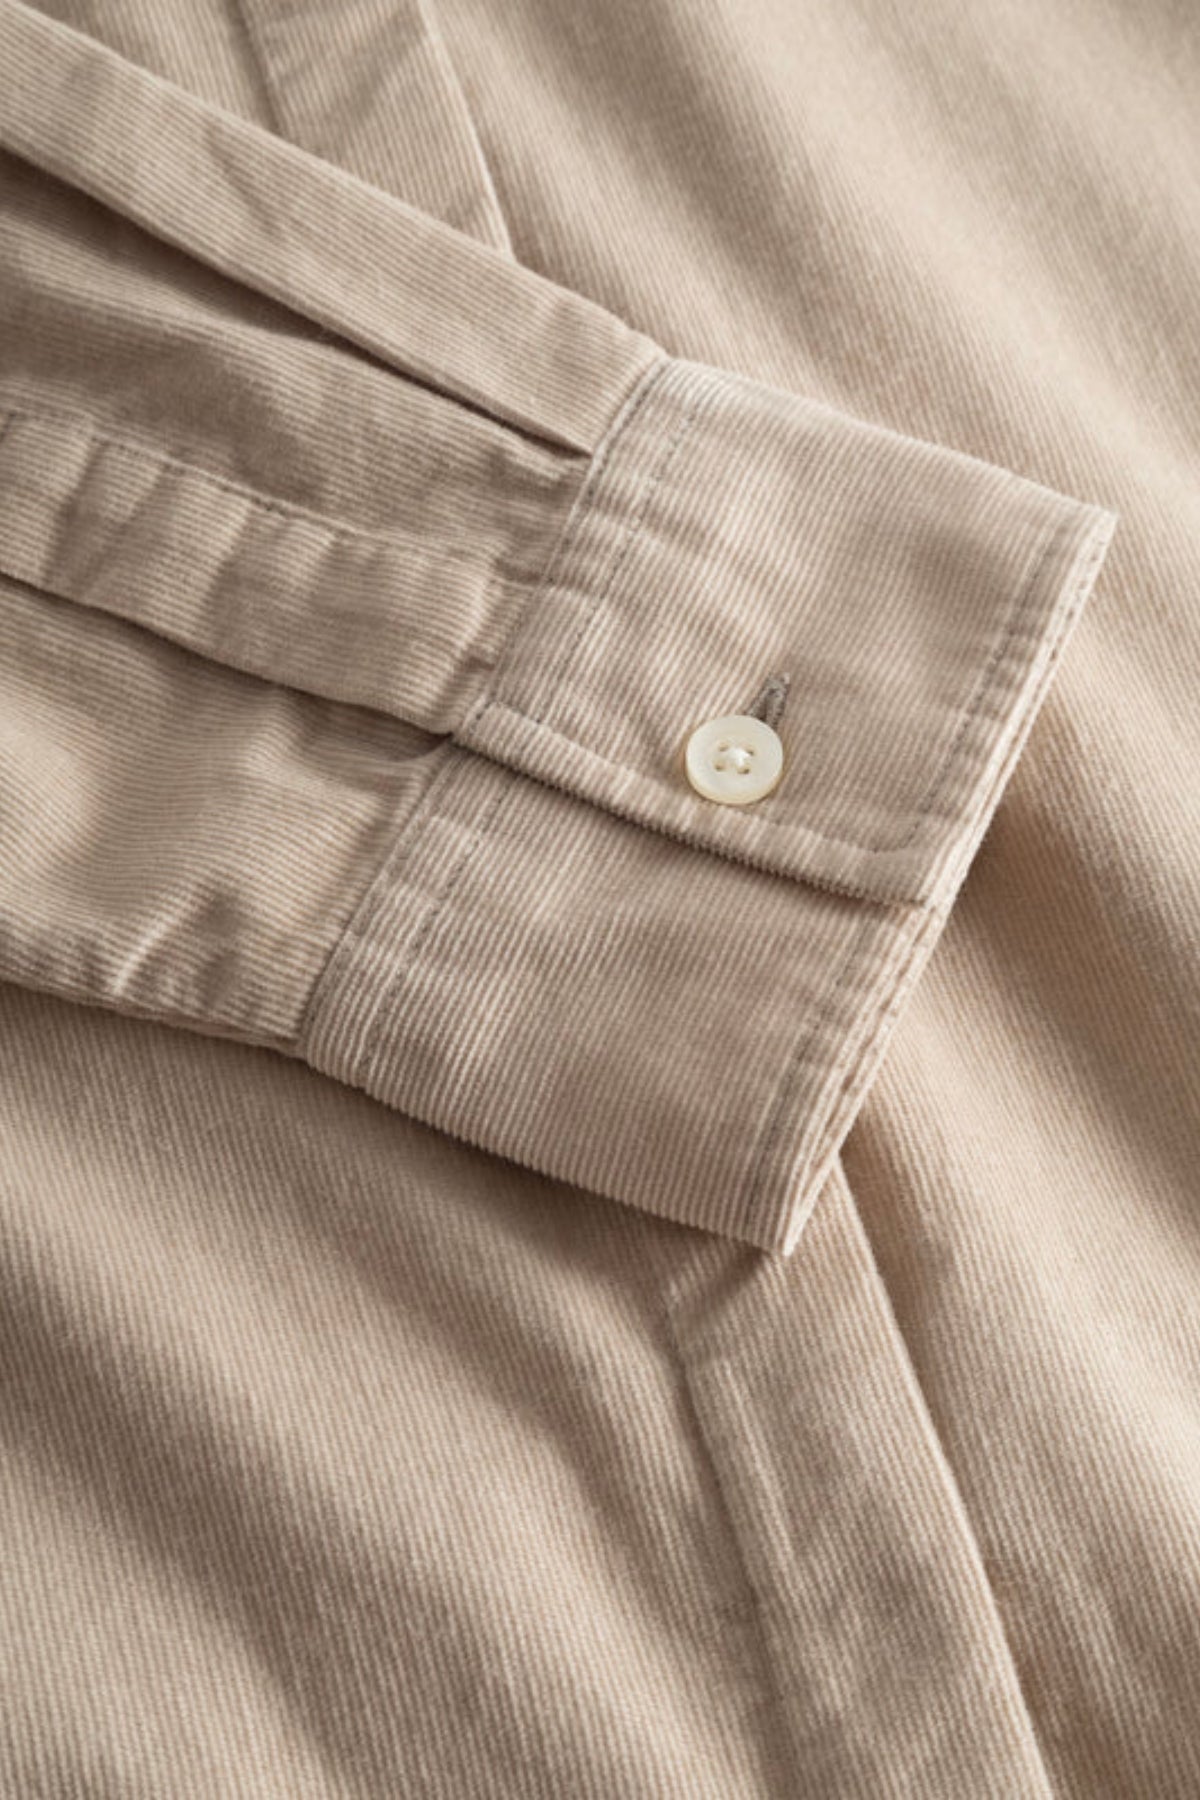 Robe Corduroy mid length shirt - Knowledge cotton apparel